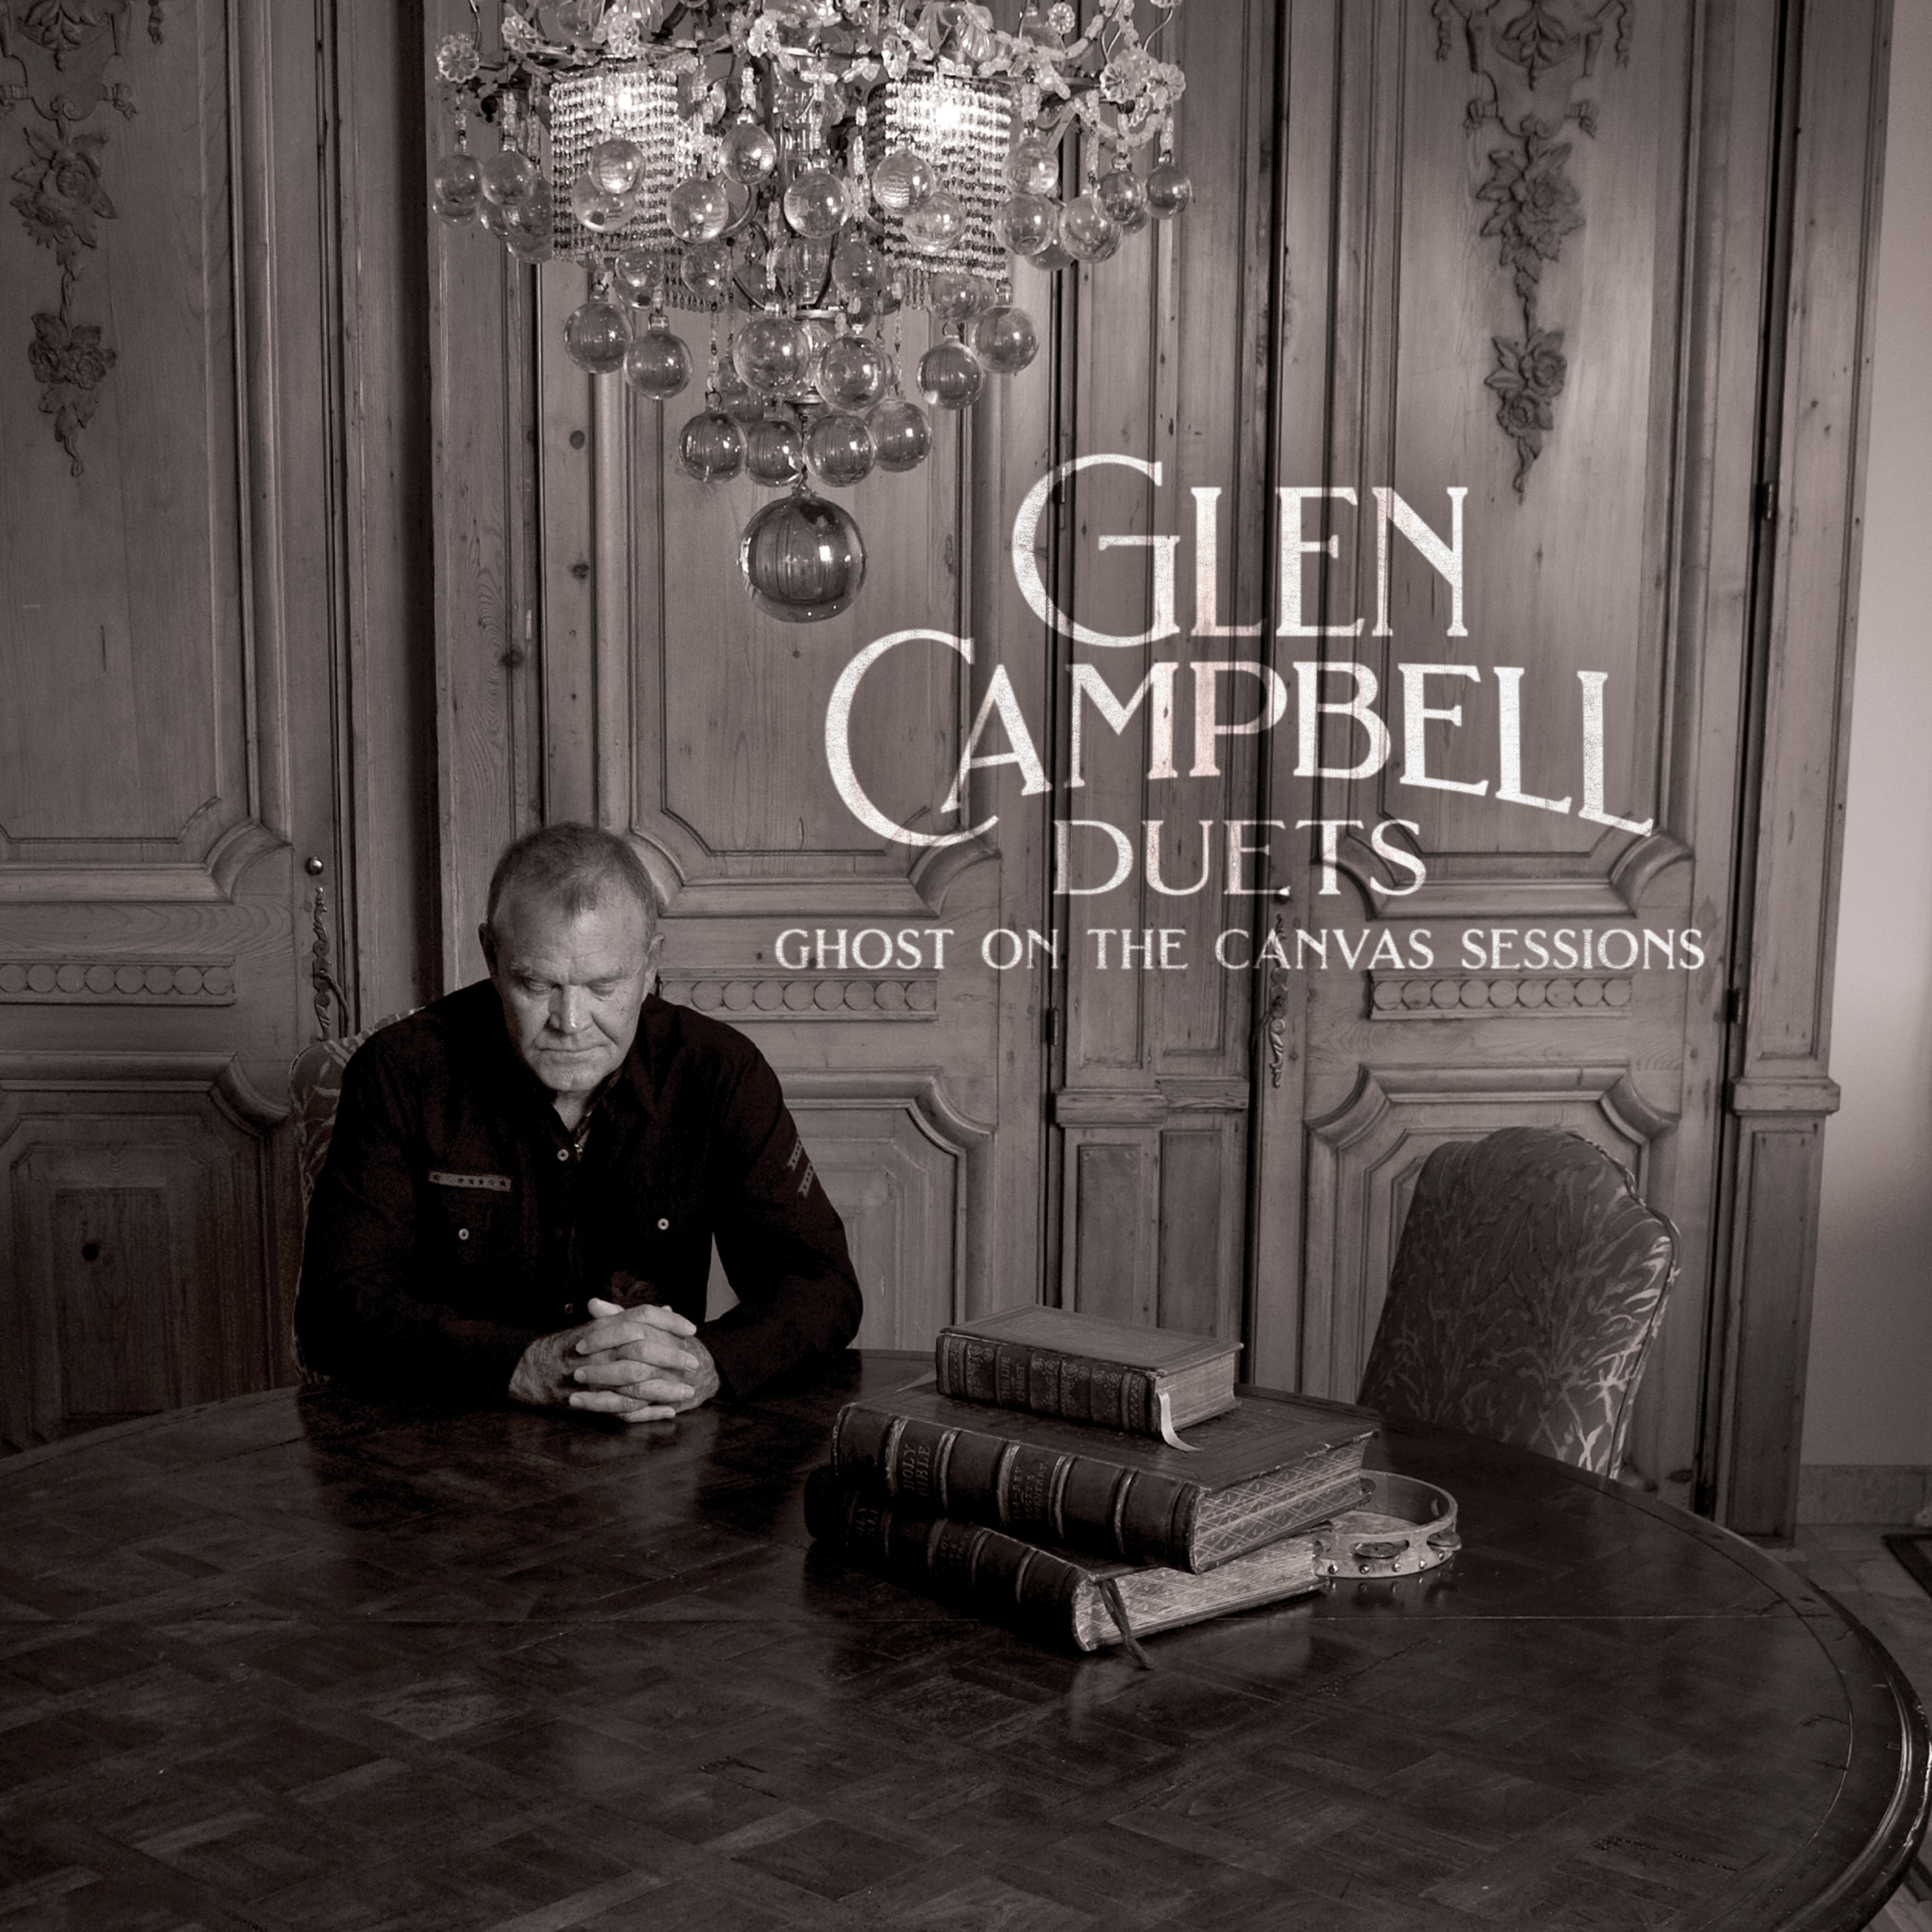 Glen Campbell Duets album art.